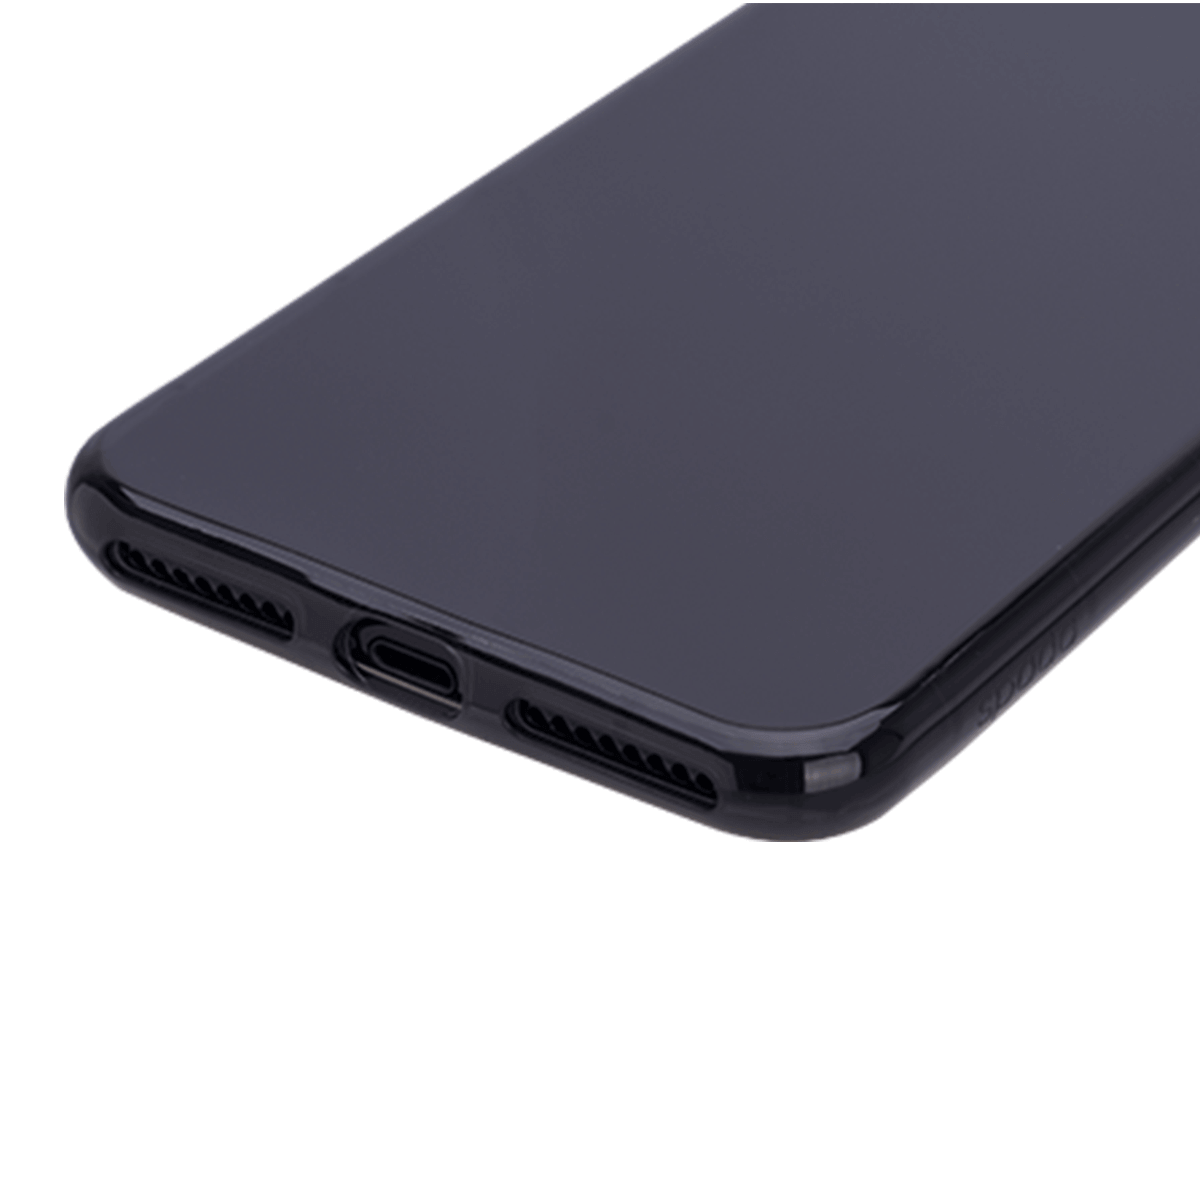 iPhone 7/8 Plus için spada Airbag Parlak Siyah TPU kapak